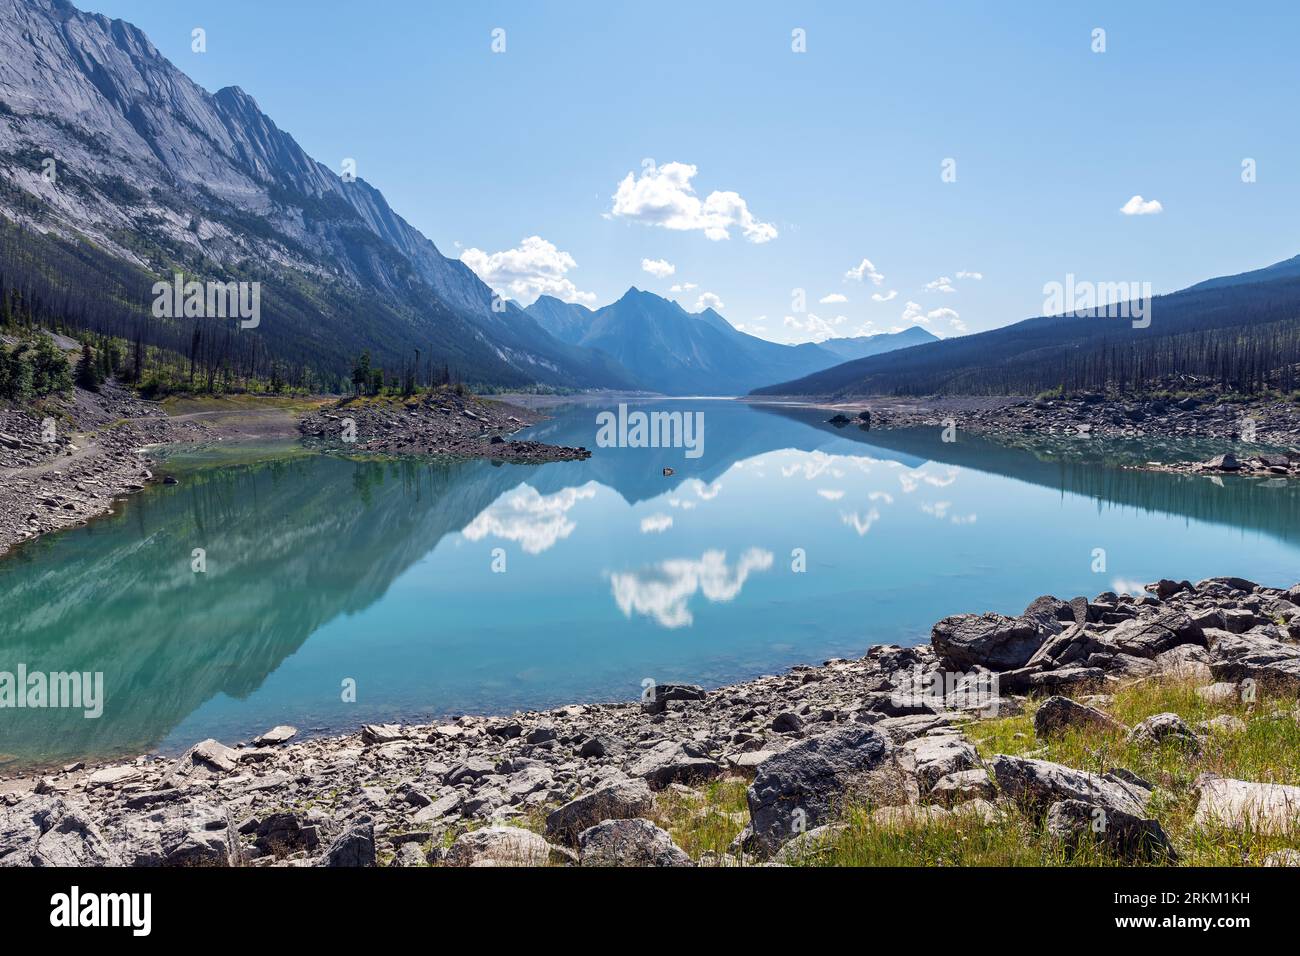 Medicine Lake Reflection, Jasper national park, Alberta, Canada. Stock Photo